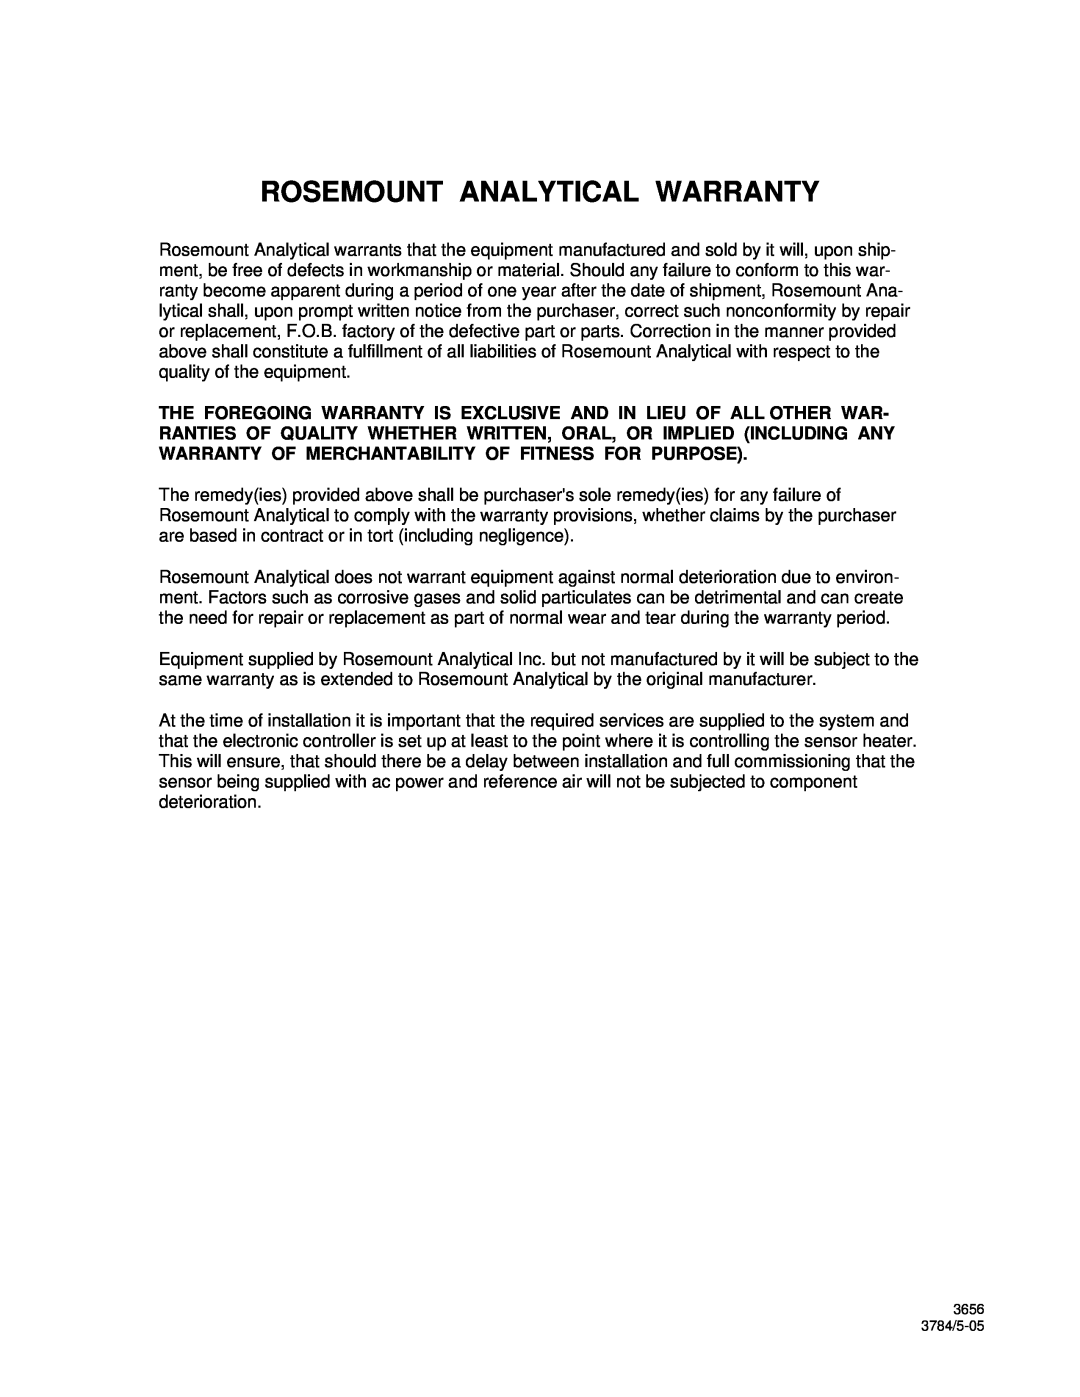 Emerson 3000 instruction manual Rosemount Analytical Warranty, 3656 3784/5-05 